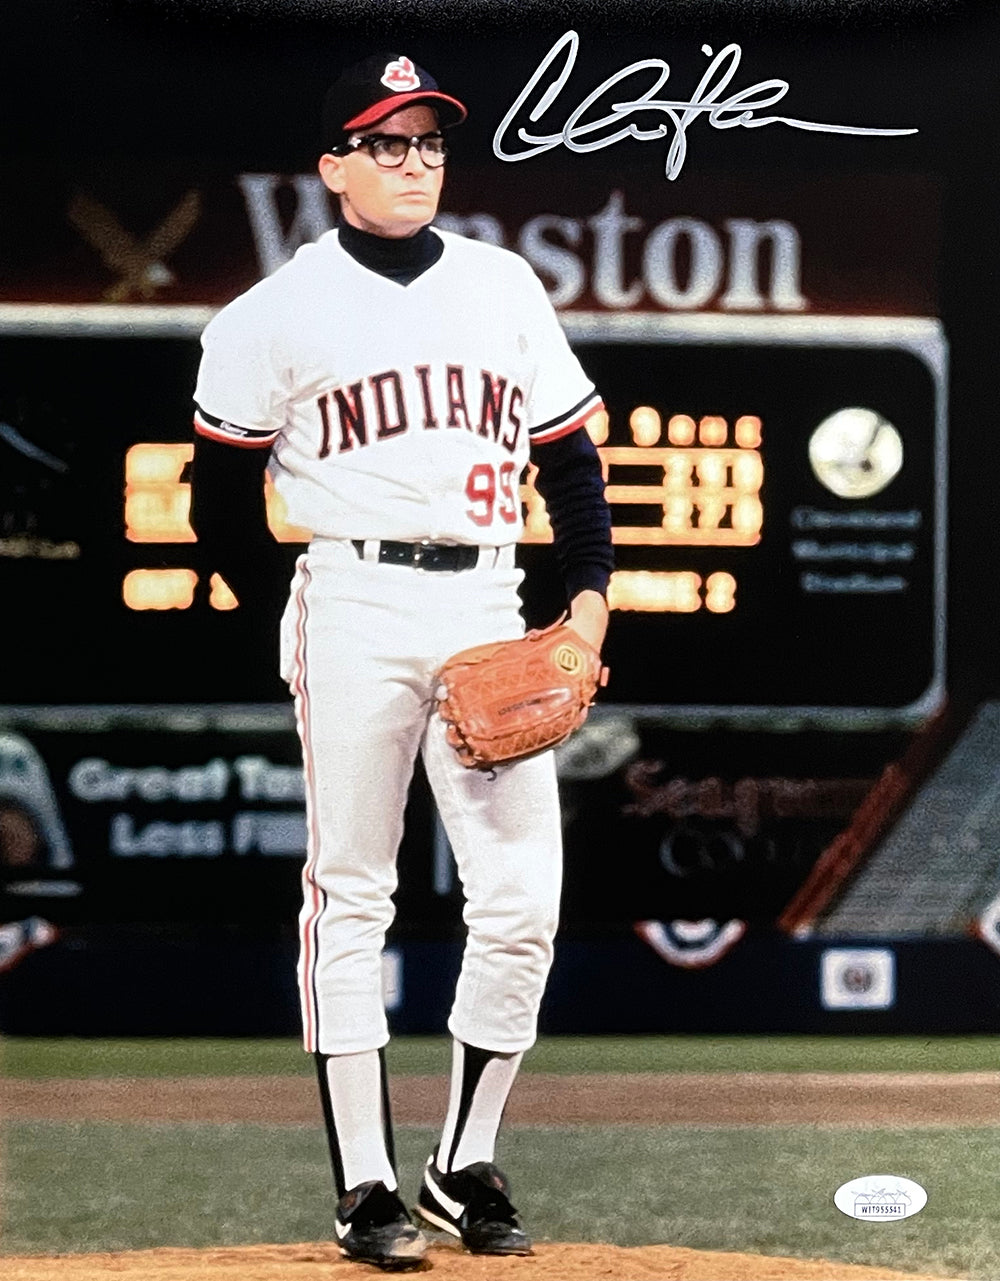 Topps readies Ricky Vaughn-Charlie Sheen jersey cards for upcoming high-end  baseball card brands - Beckett News